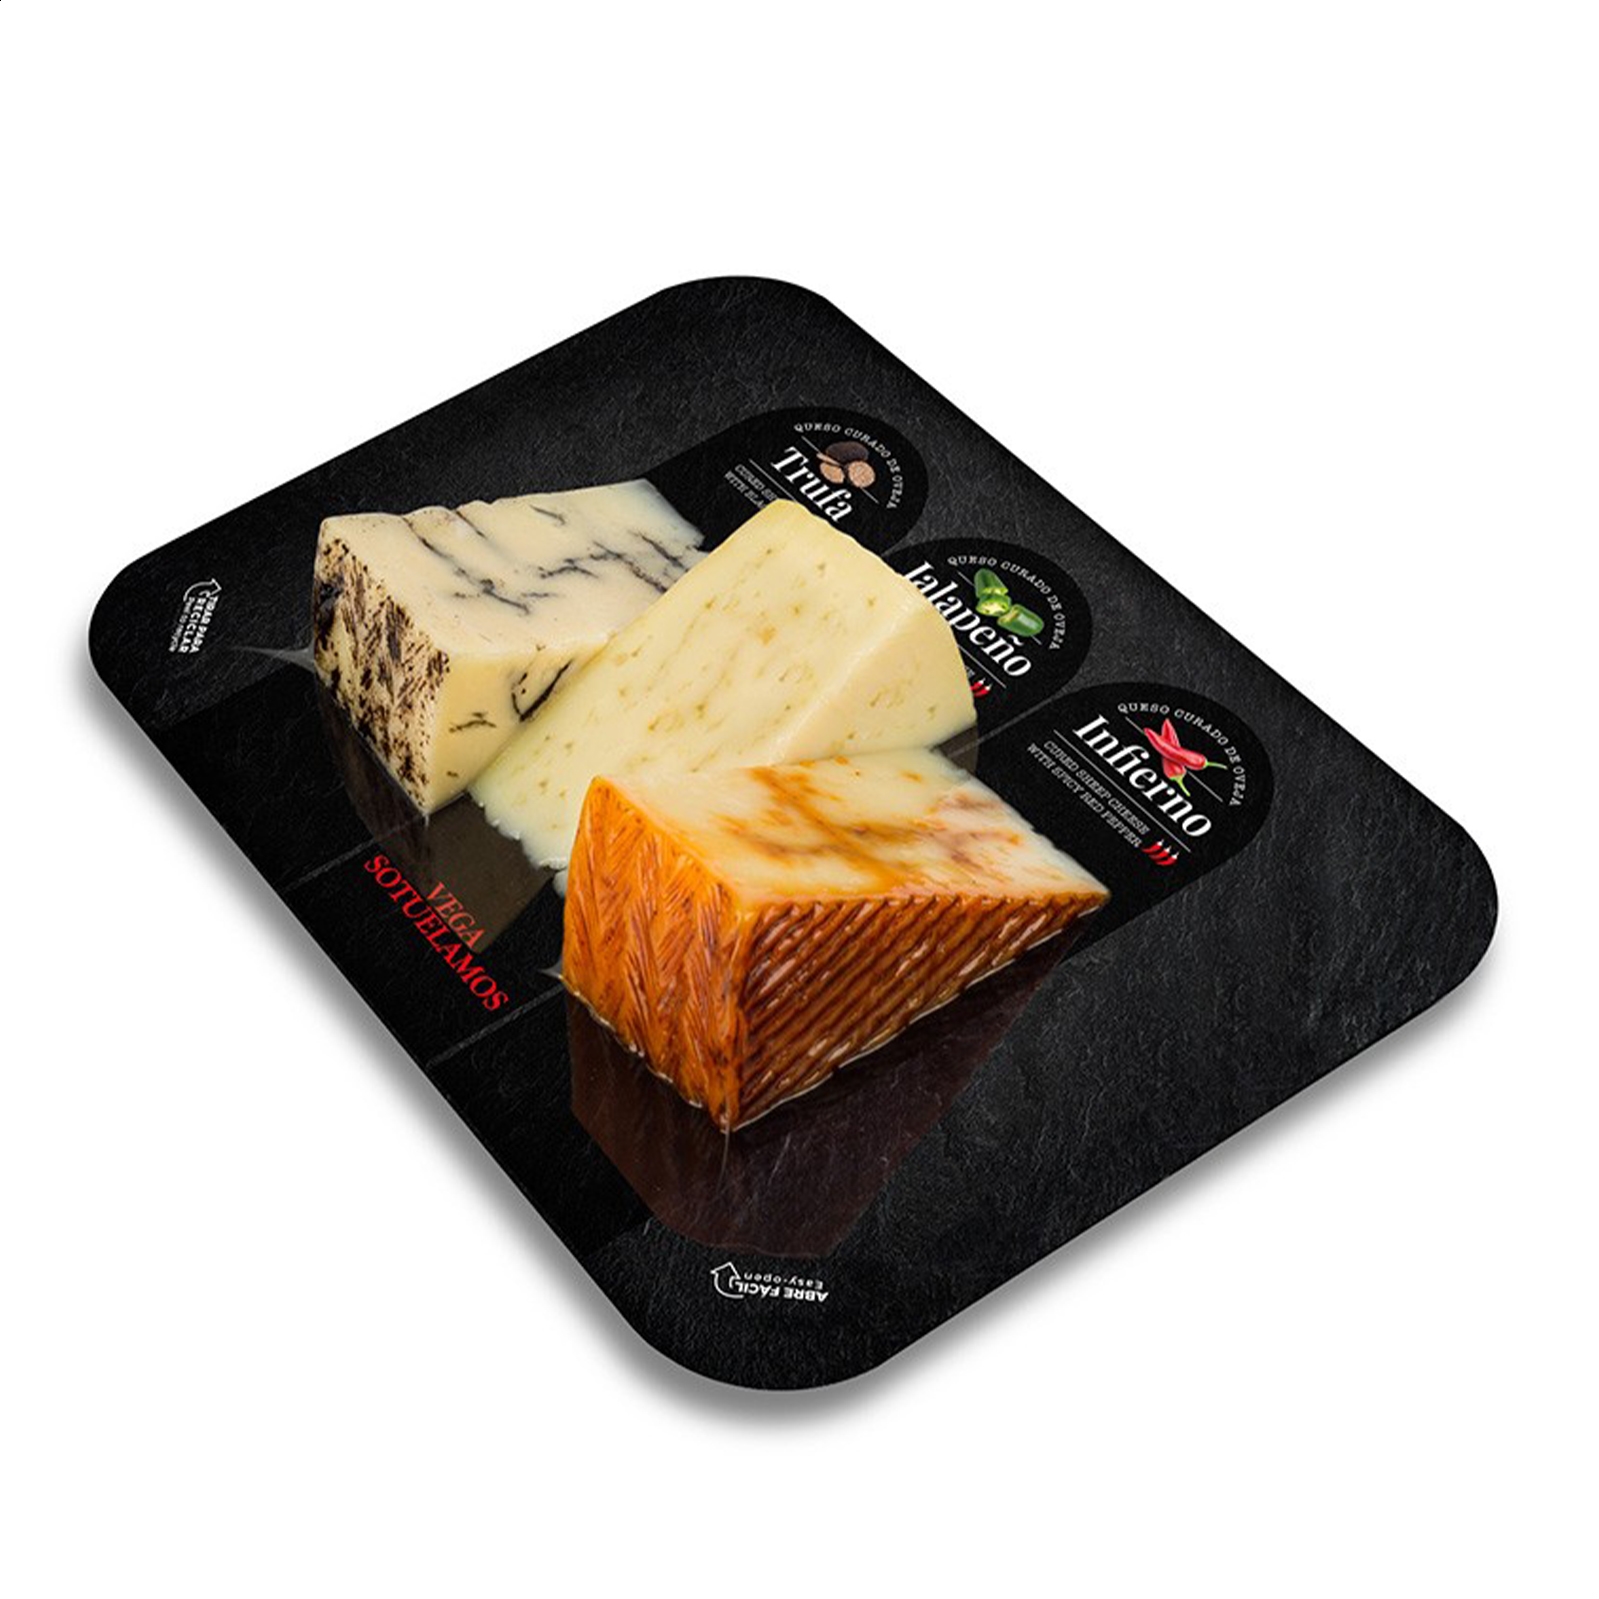 Vega Sotuélamos - Tabla de queso de oveja precortados de leche pasteurizada 100g aprox, 3uds